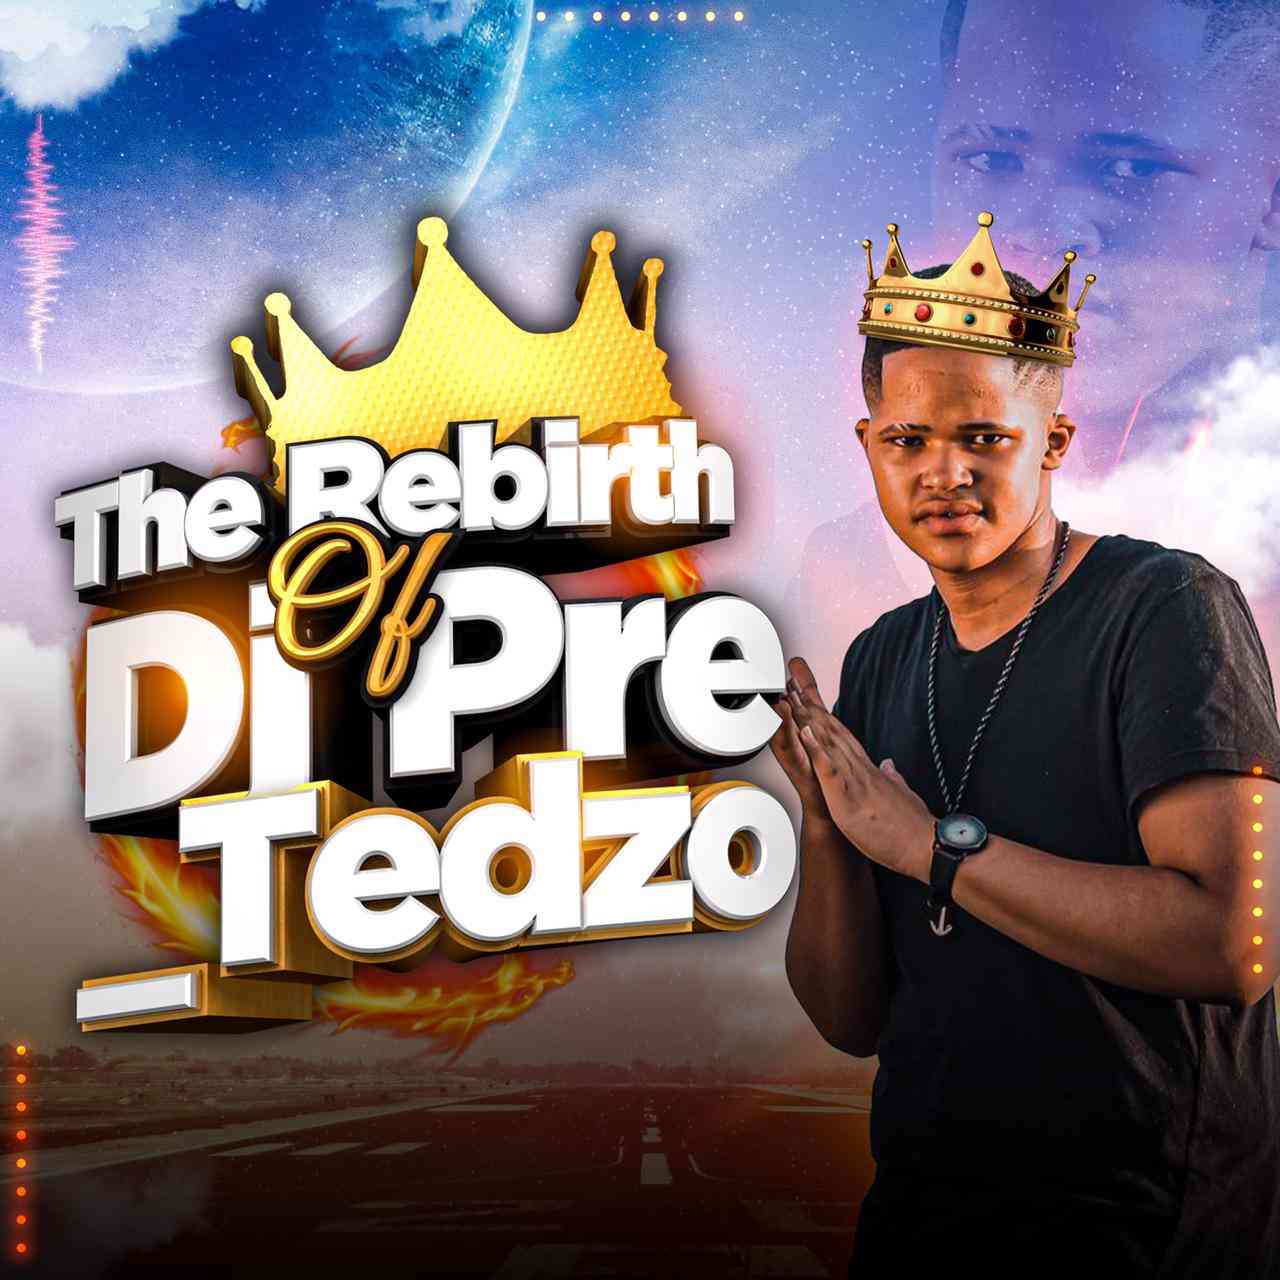 Dj Pre_Tedzo The Rebirth of Dj Pre_Tedzo